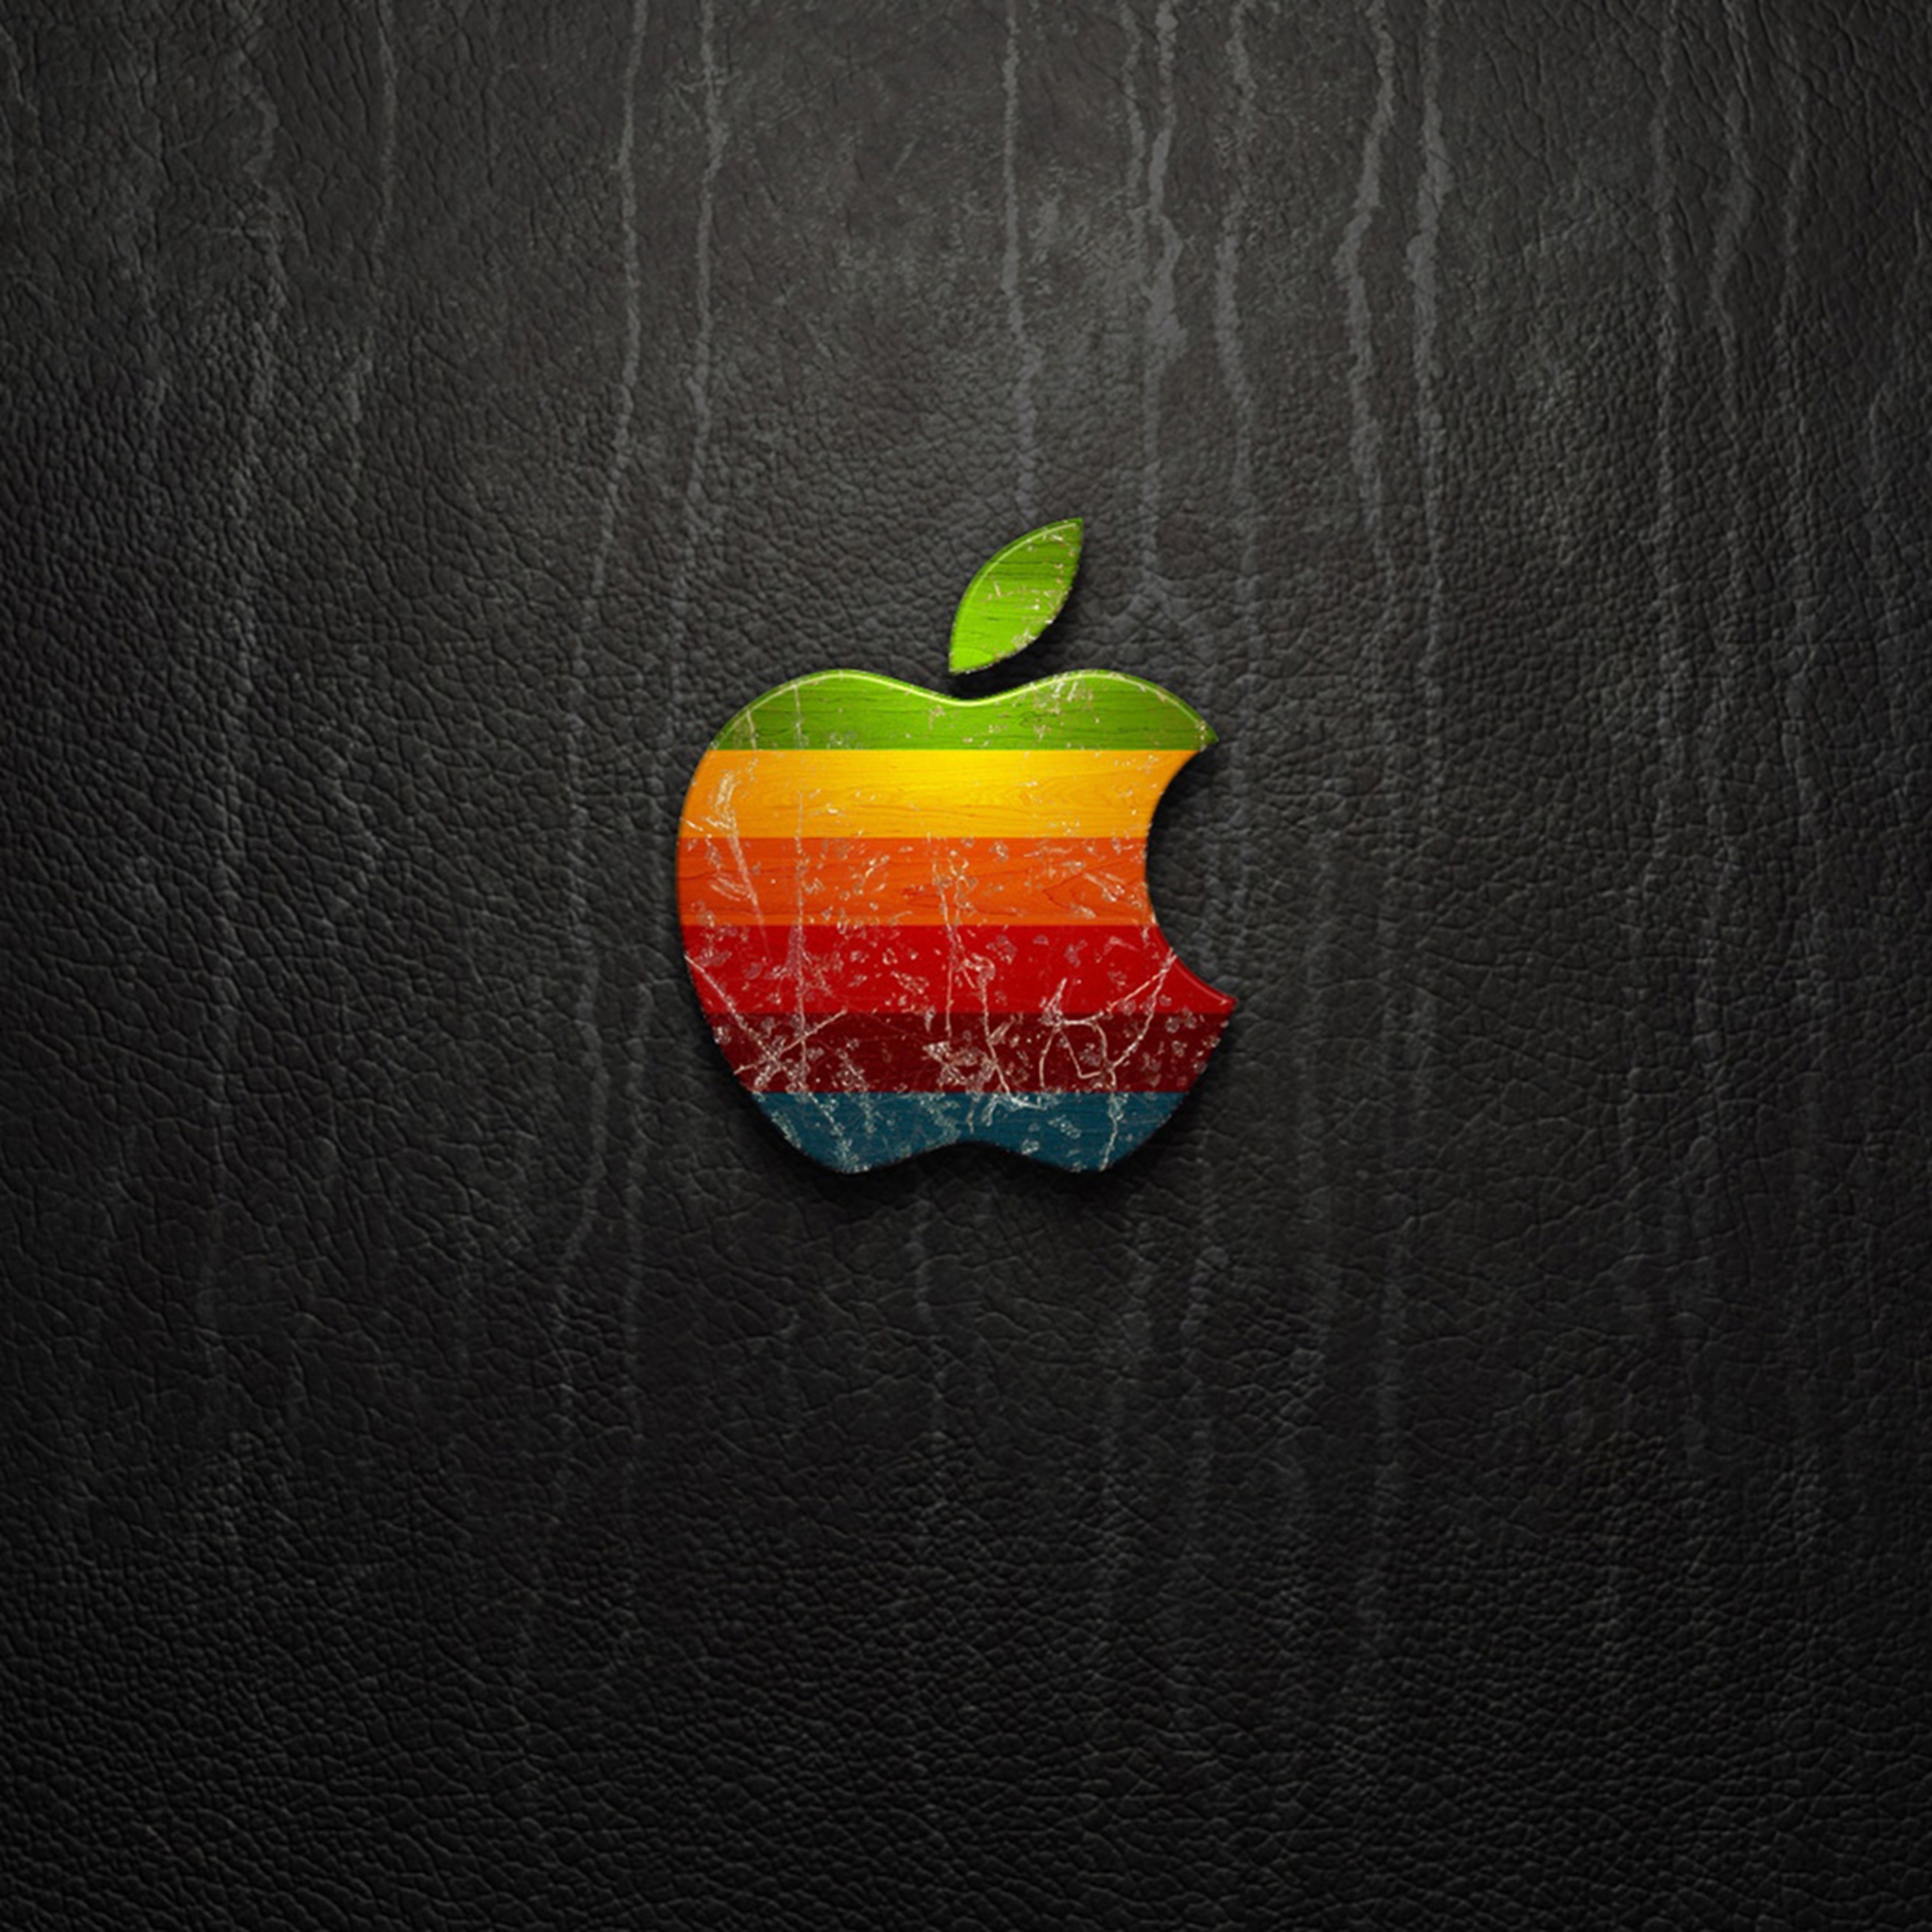 Apple Leather Ipad Wallpaper